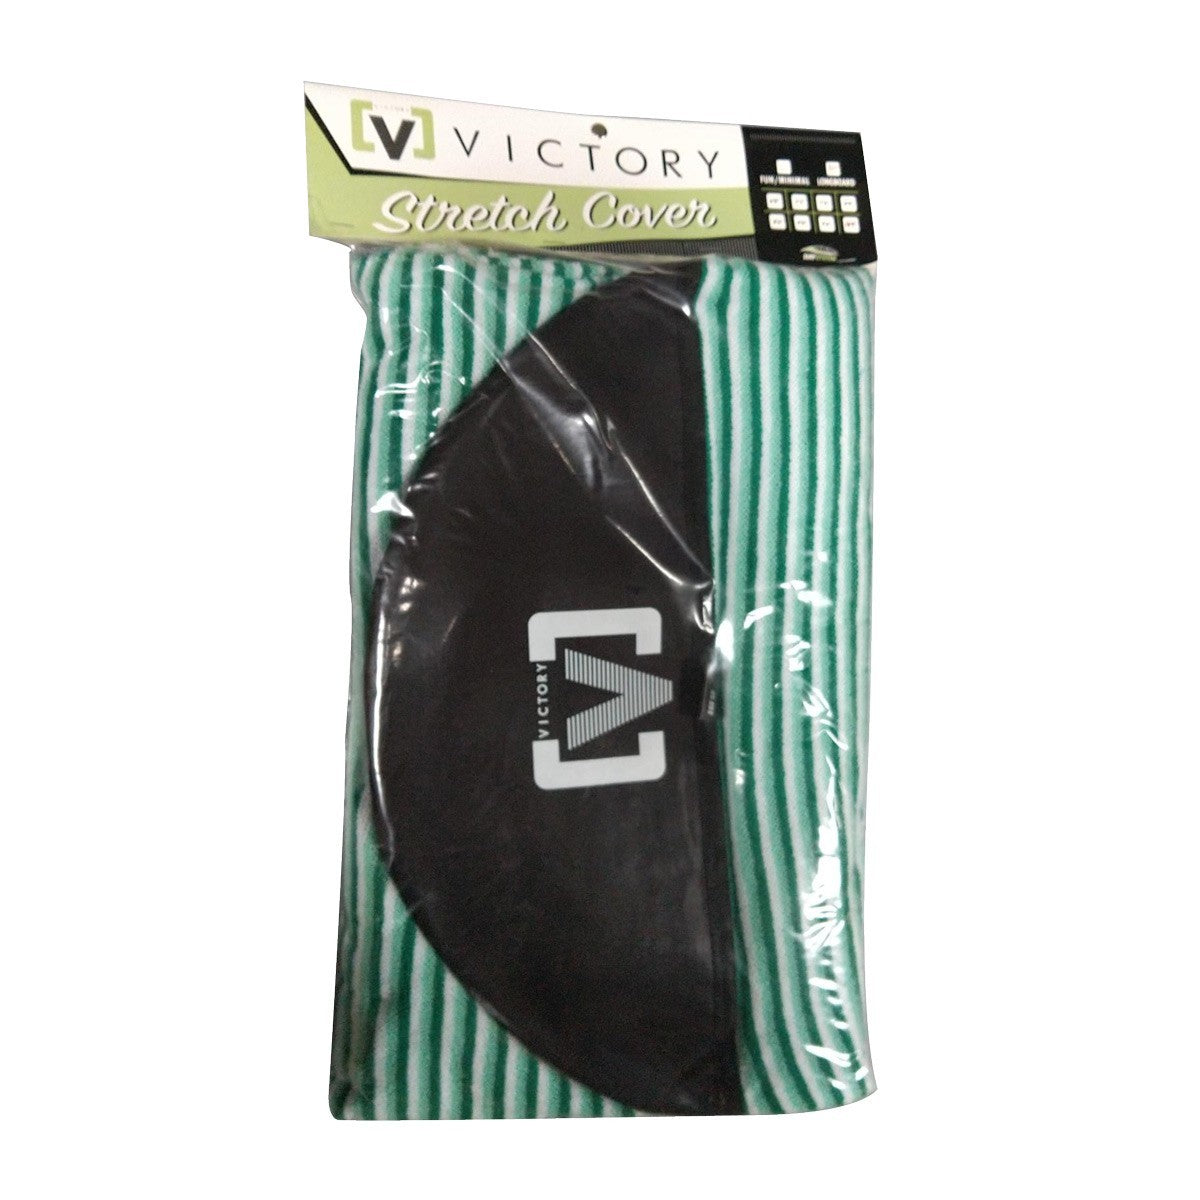 VICTORY - Longboard sock cover - 10' - Green / Brown